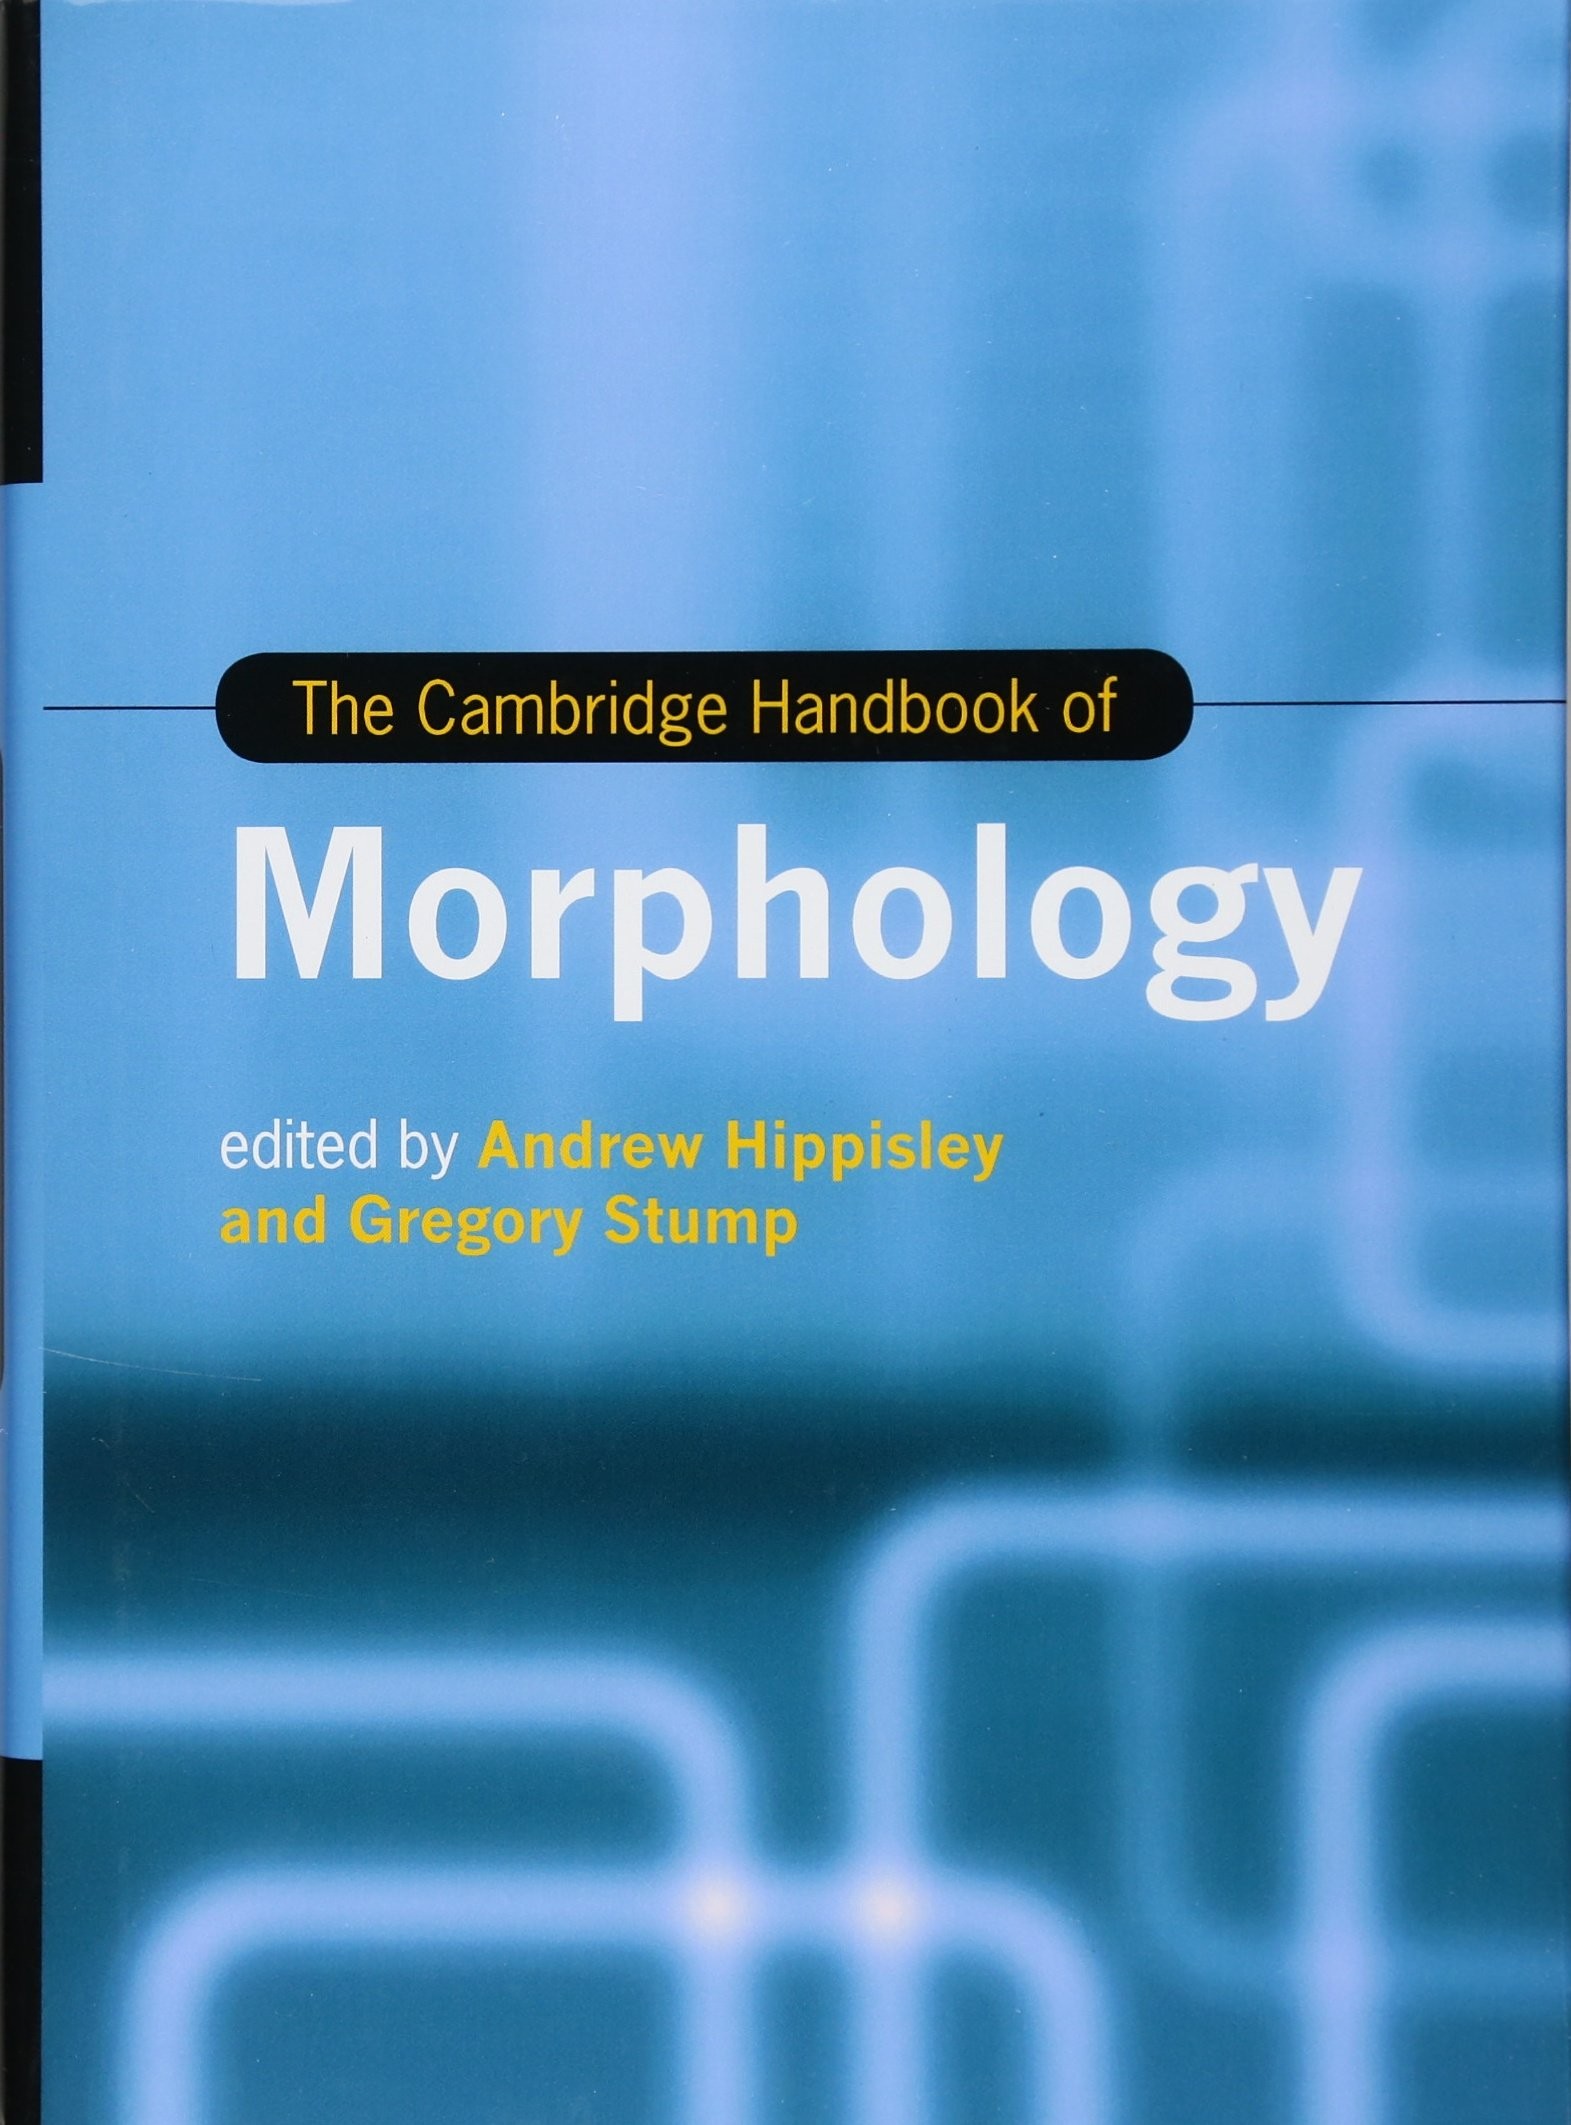 The Cambridge Handbook of Morphology